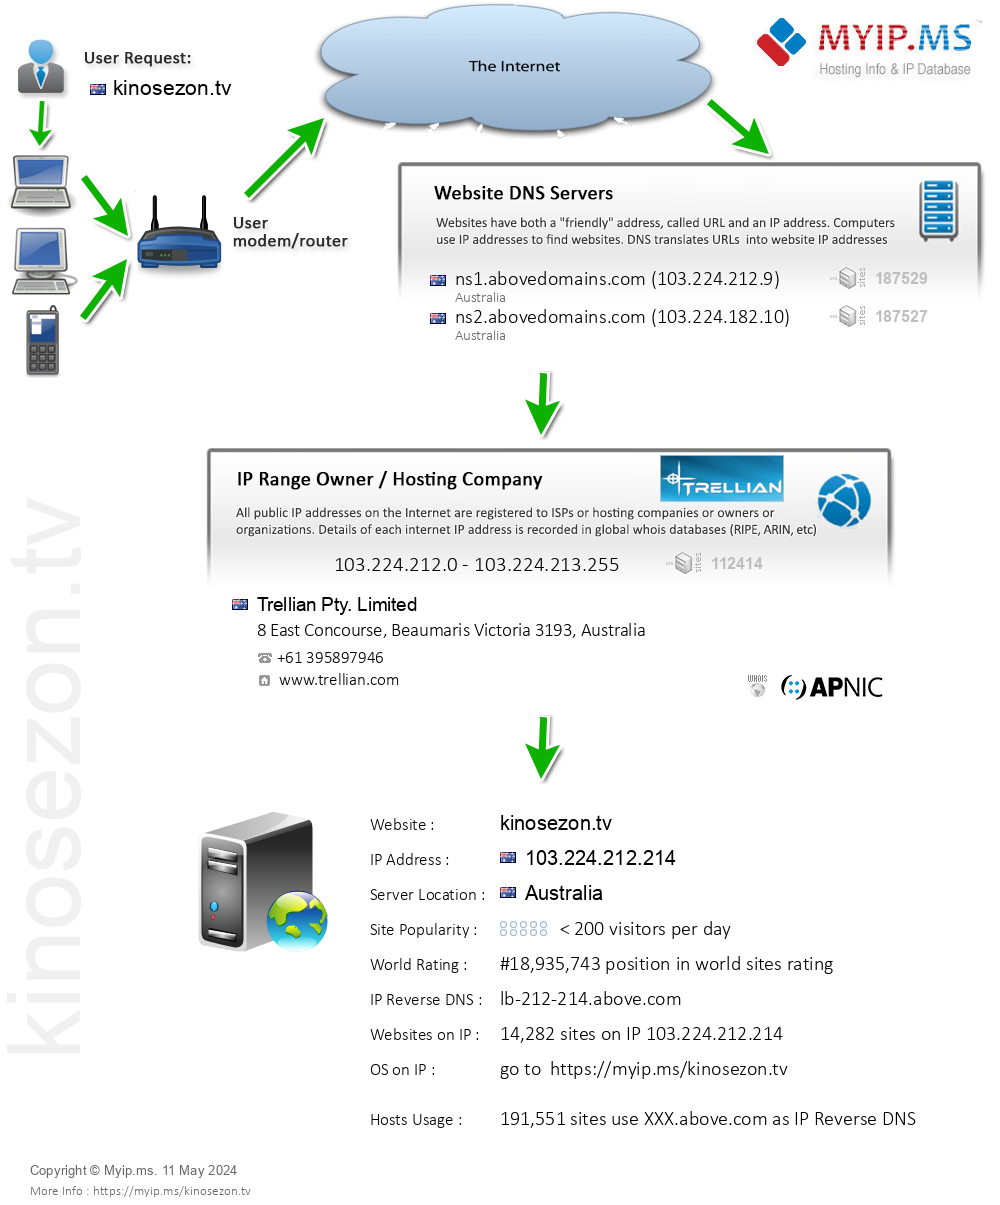 Kinosezon.tv - Website Hosting Visual IP Diagram